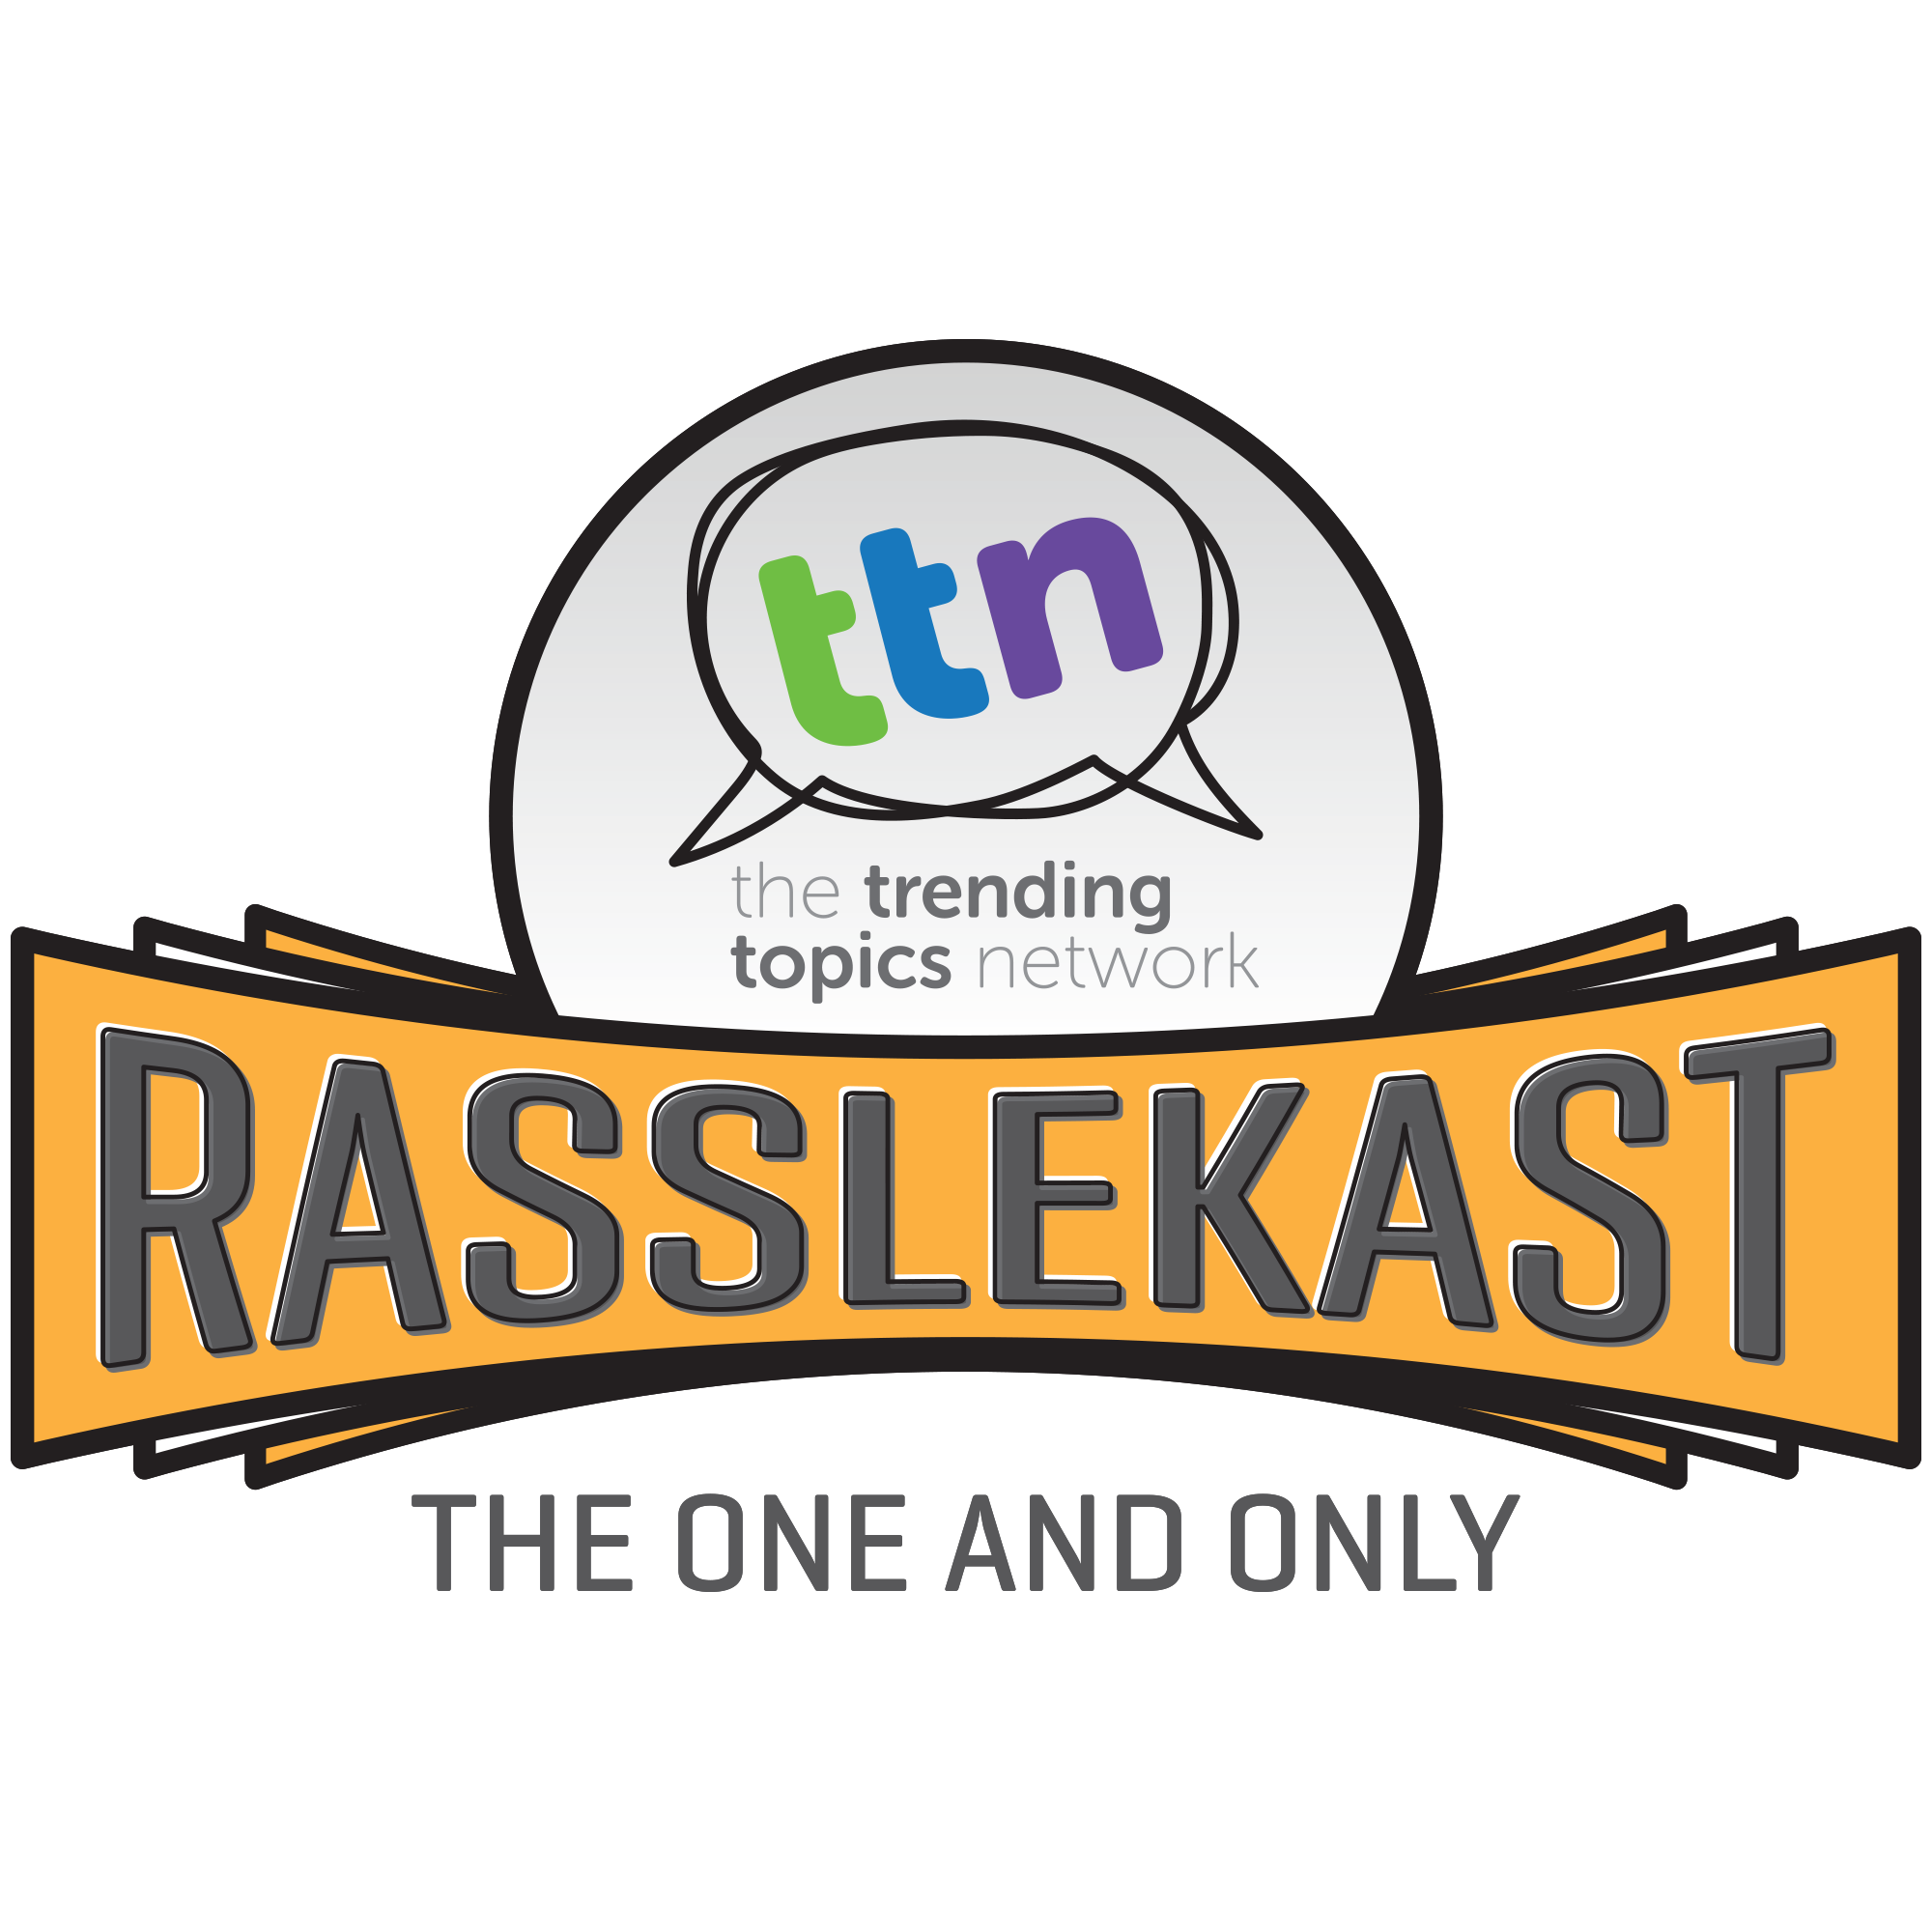 RassleKast Episode 148 - “Dynamic Duo”